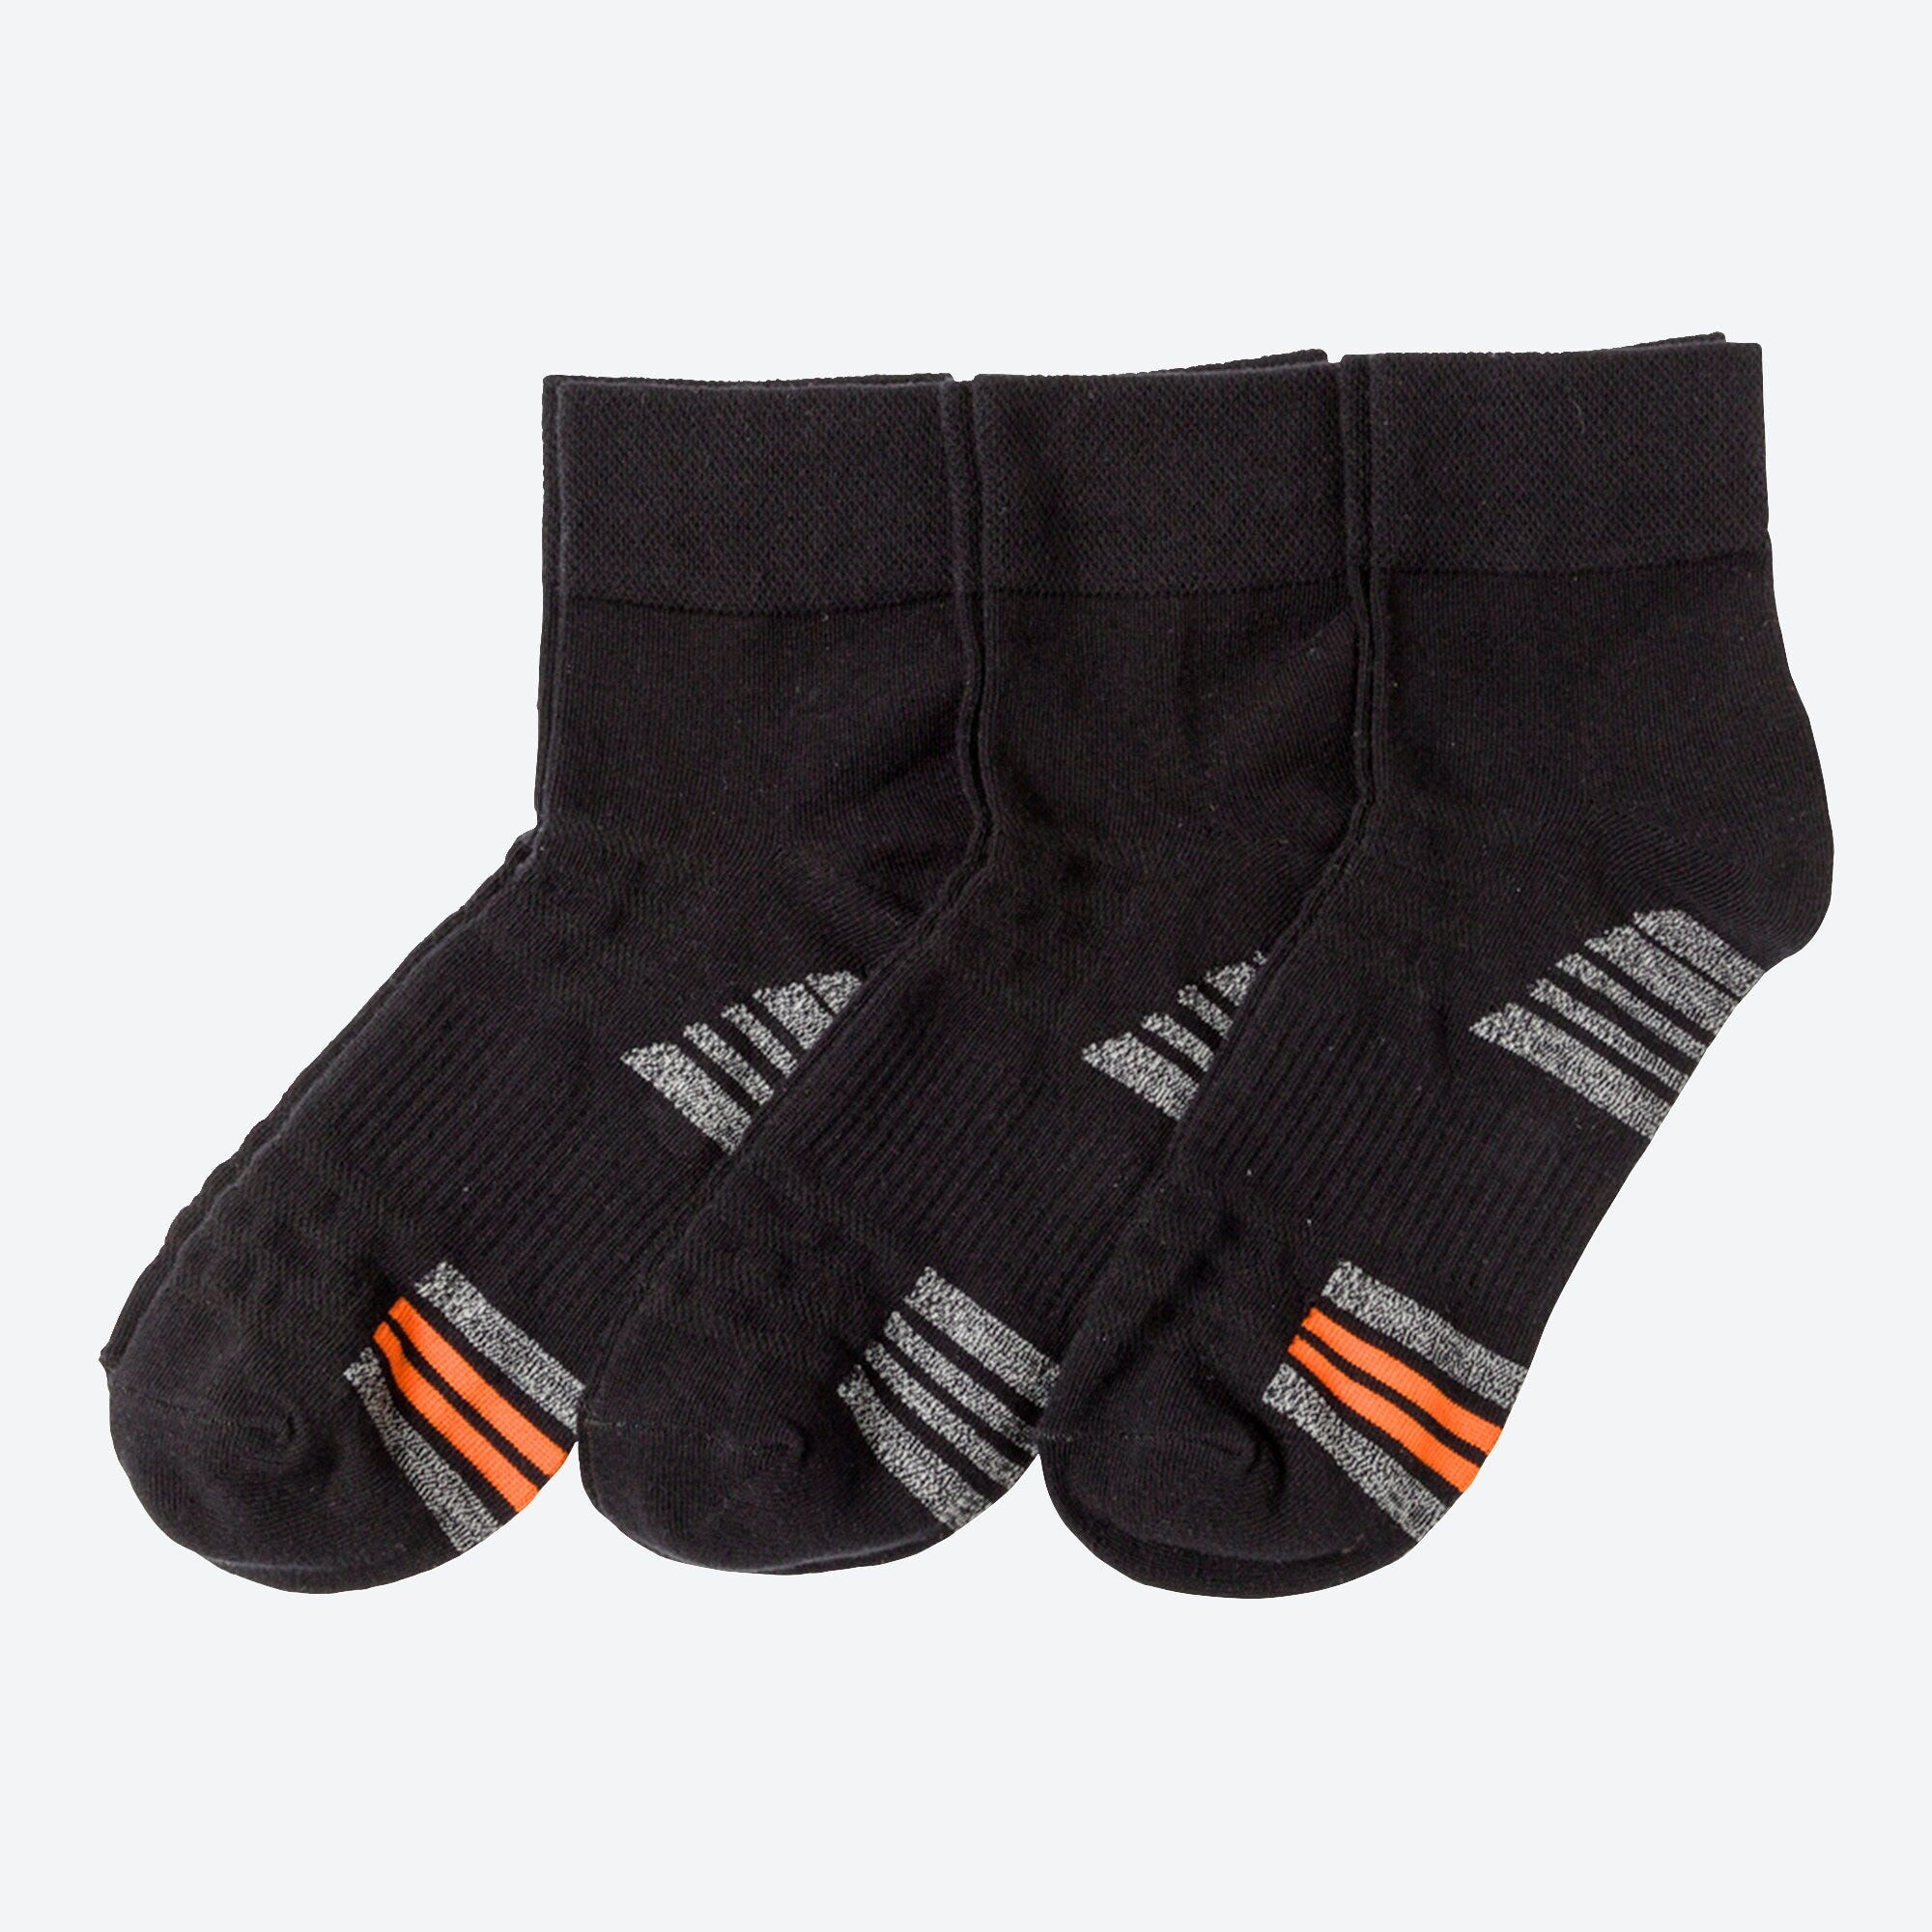 Herren-Sport-Sneaker-Socken mit Mesh, 3er-Pack